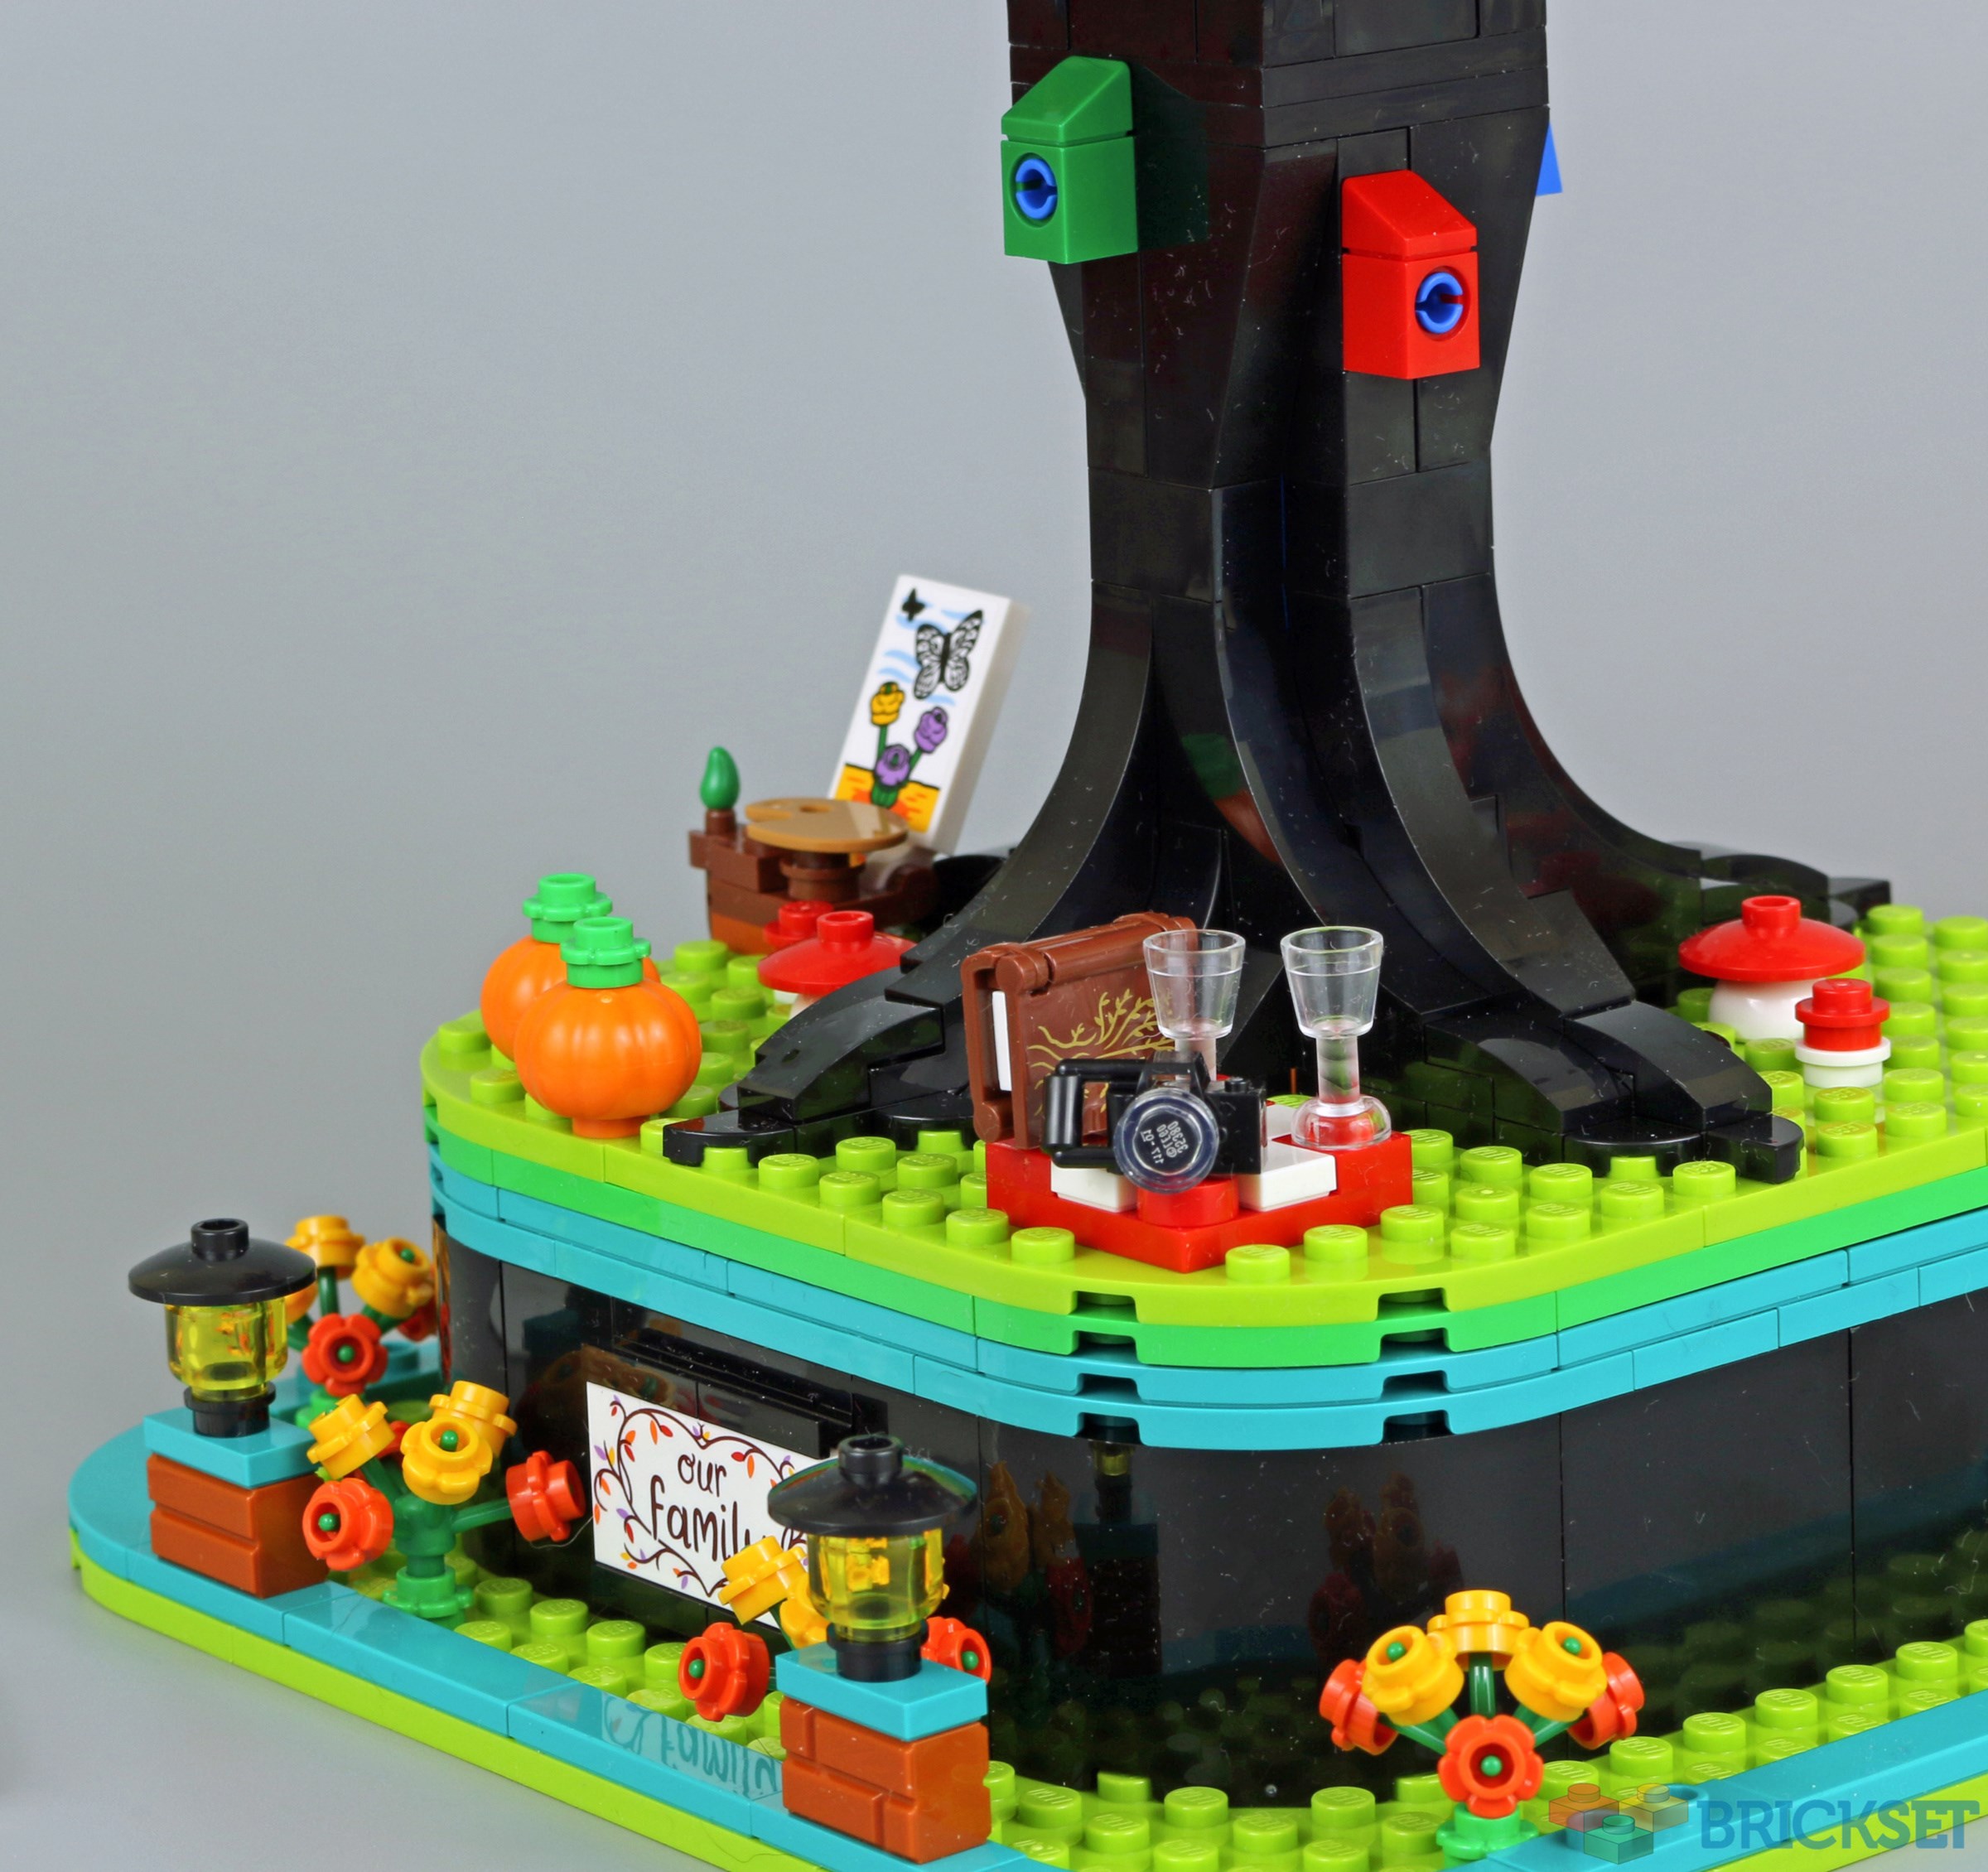 LEGO announces smaller, 1050-brick version of R2D2 to celebrate